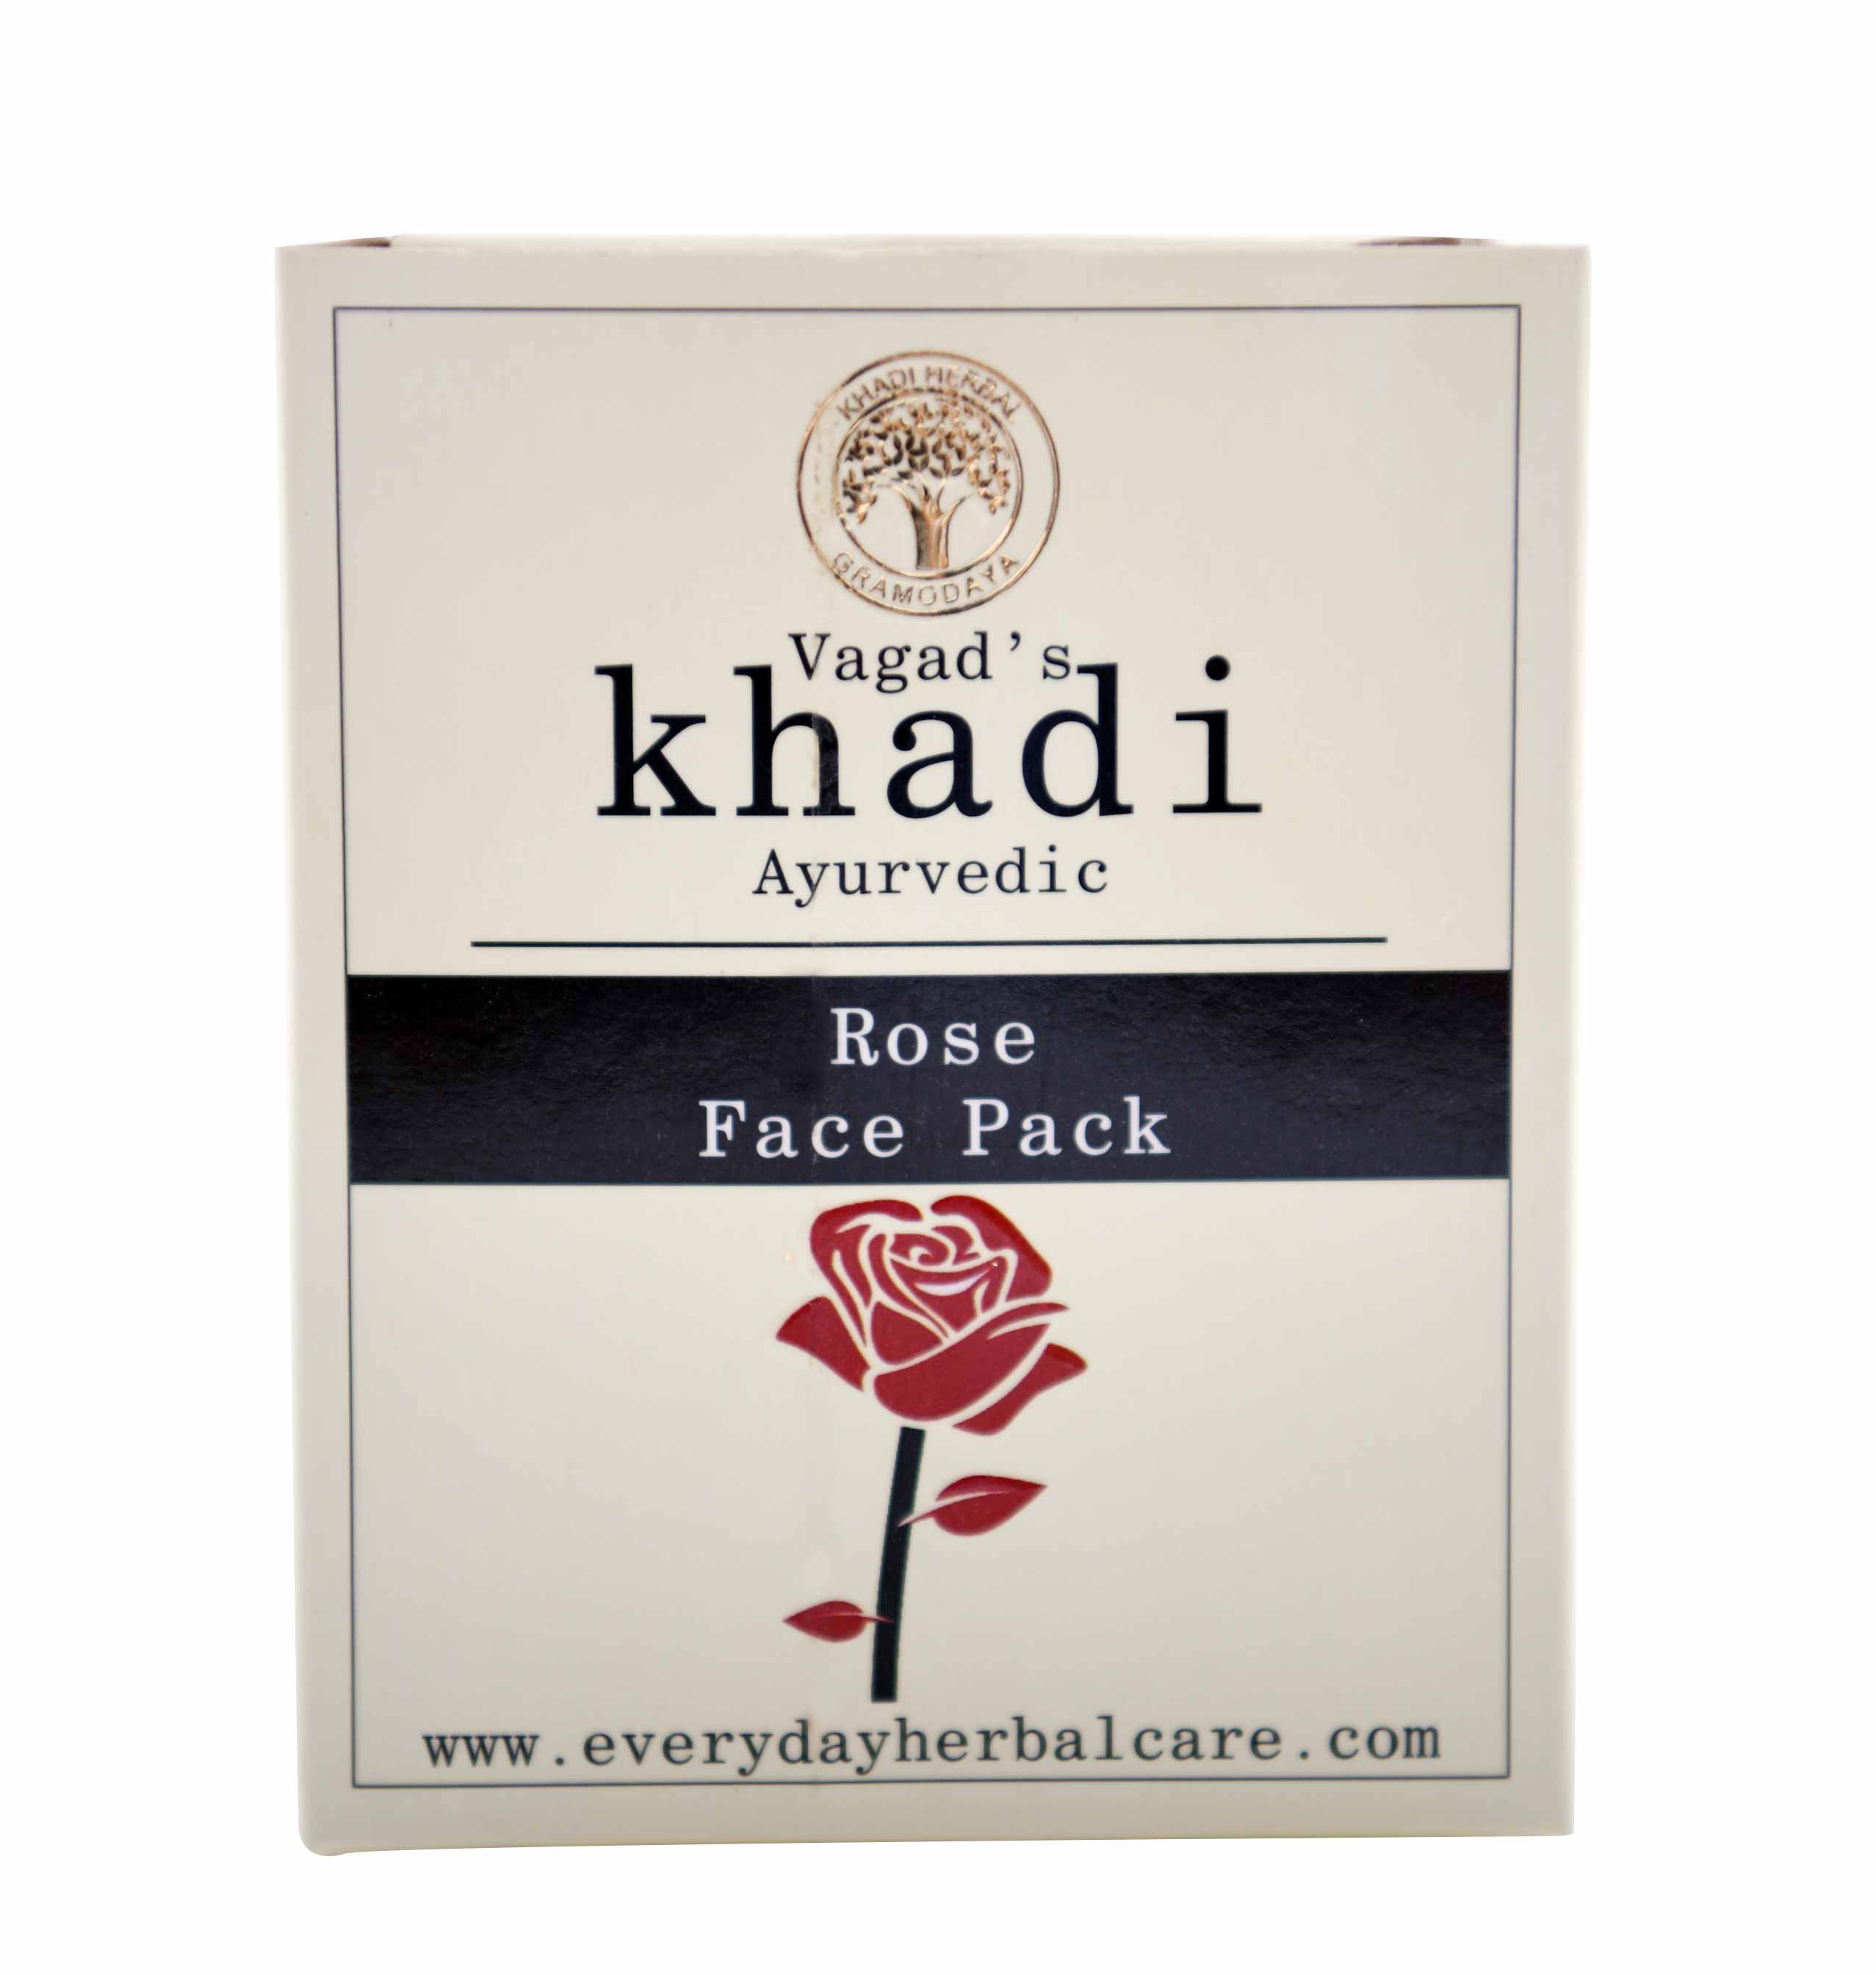 Buy Vagad's Khadi Rose Face Pack Powder at Best Price Online